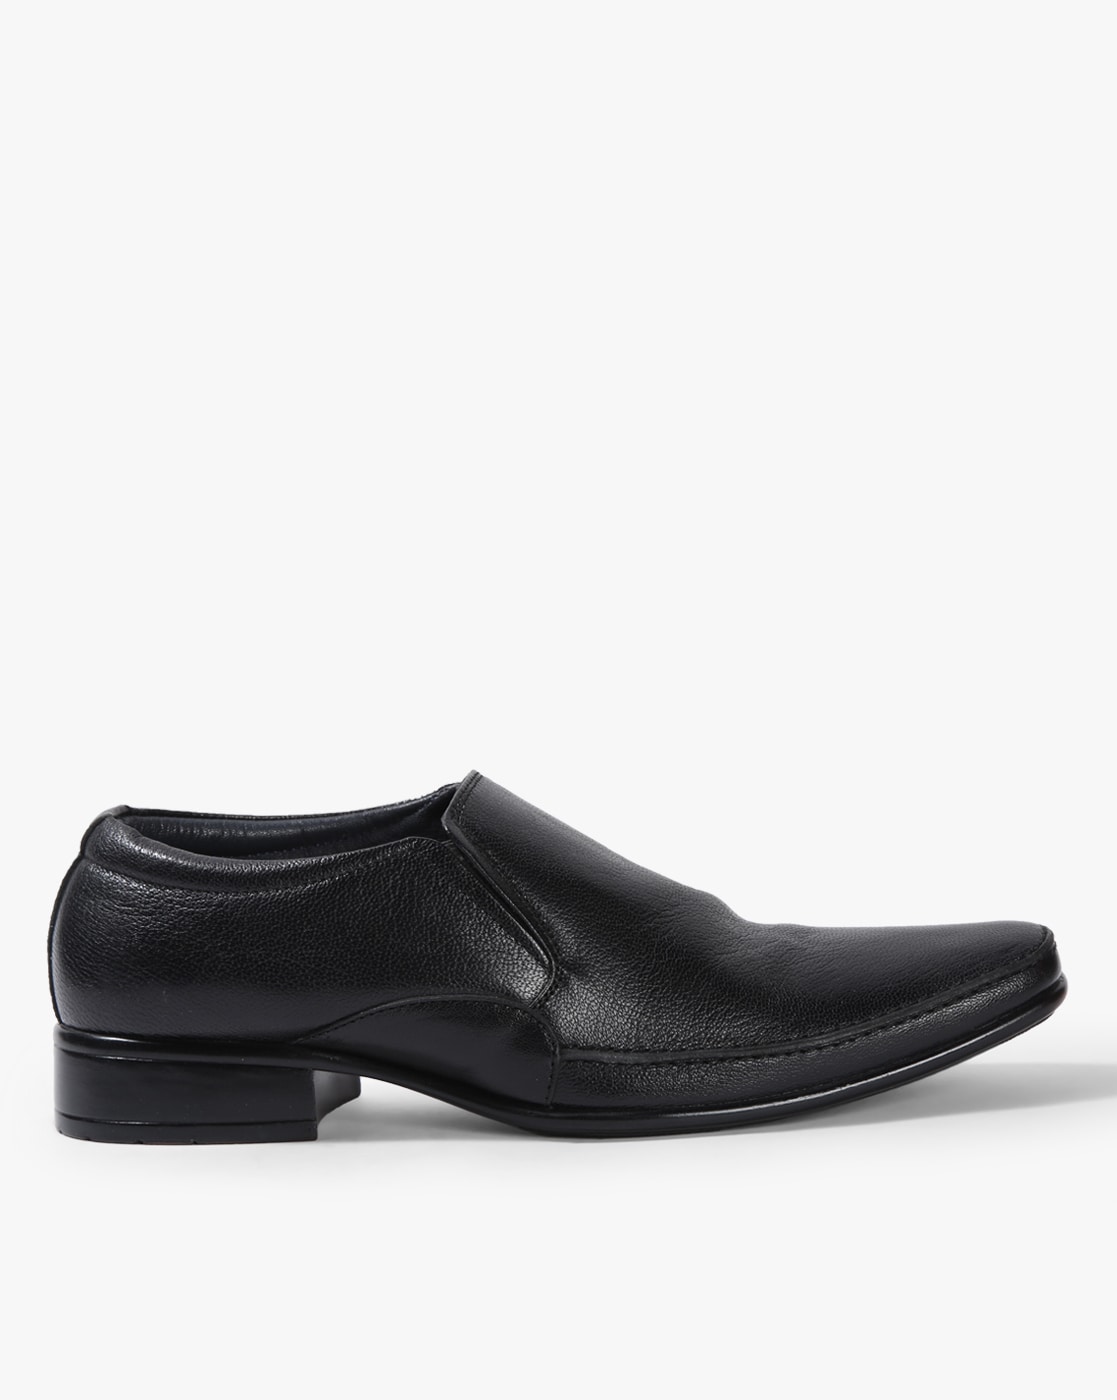 Buy Black Formal Shoes for Men by EGOSS 